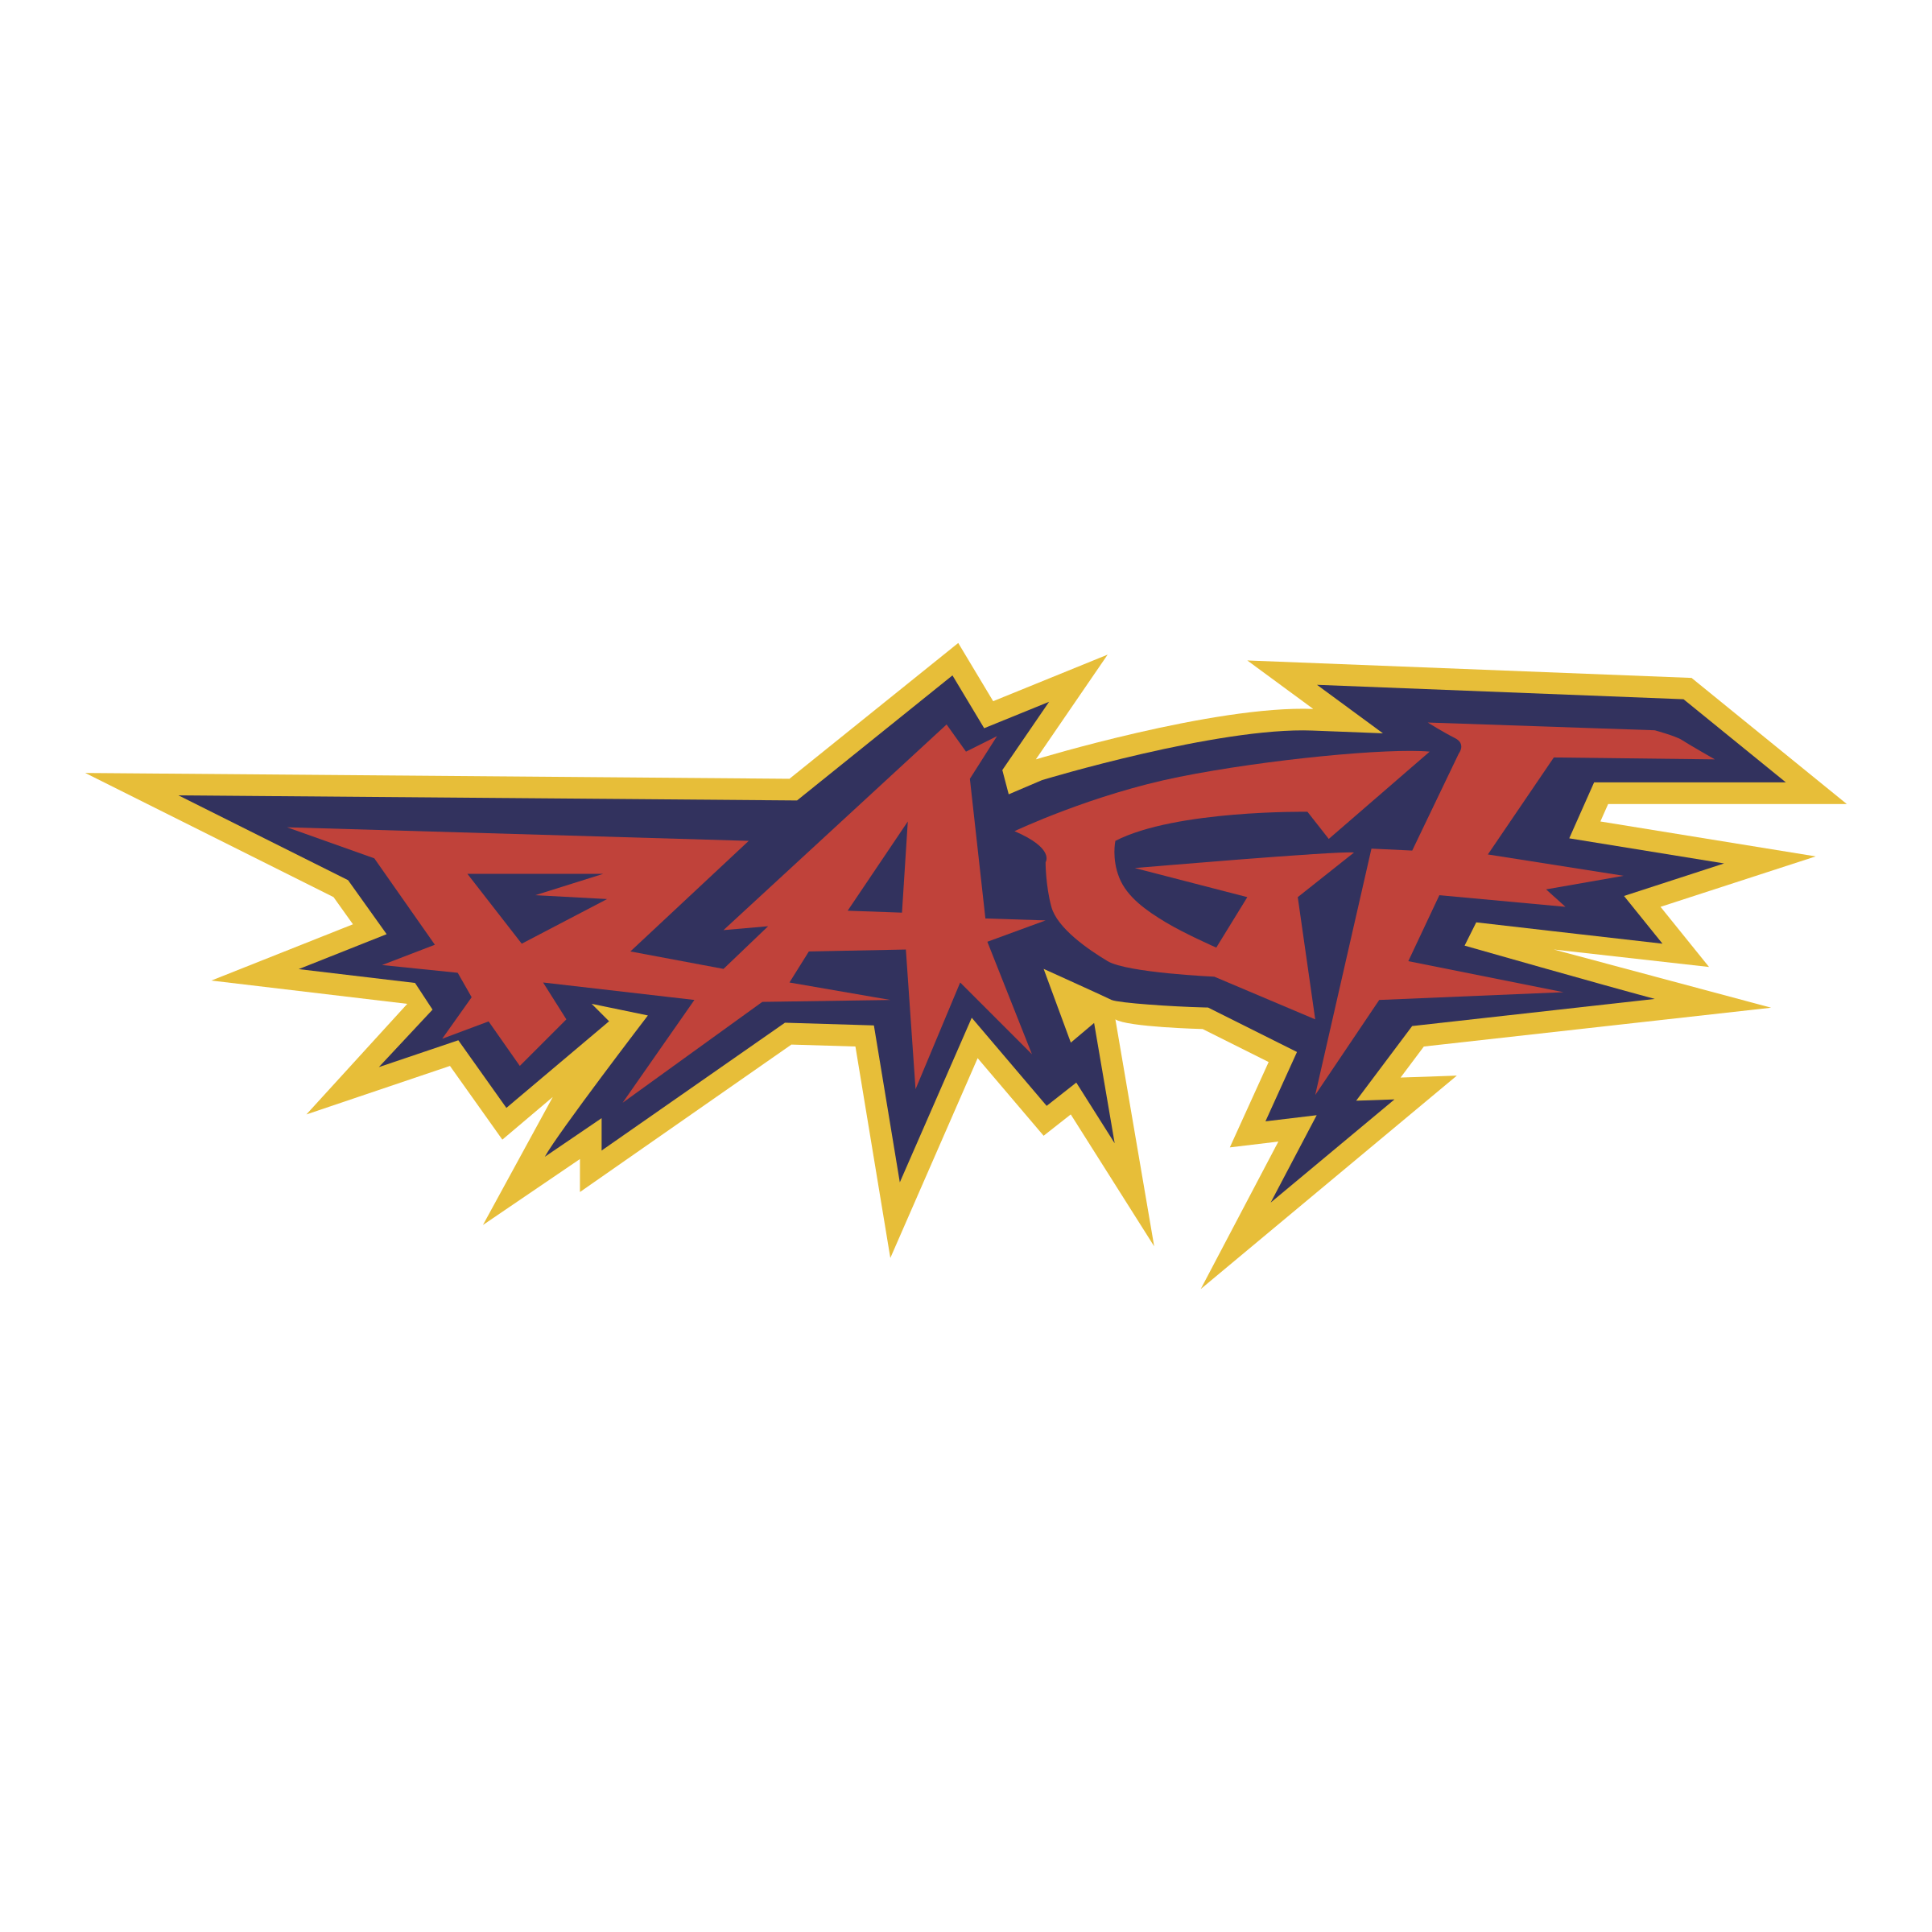 Rage Logo - Orlando Rage Logo PNG Transparent & SVG Vector - Freebie Supply